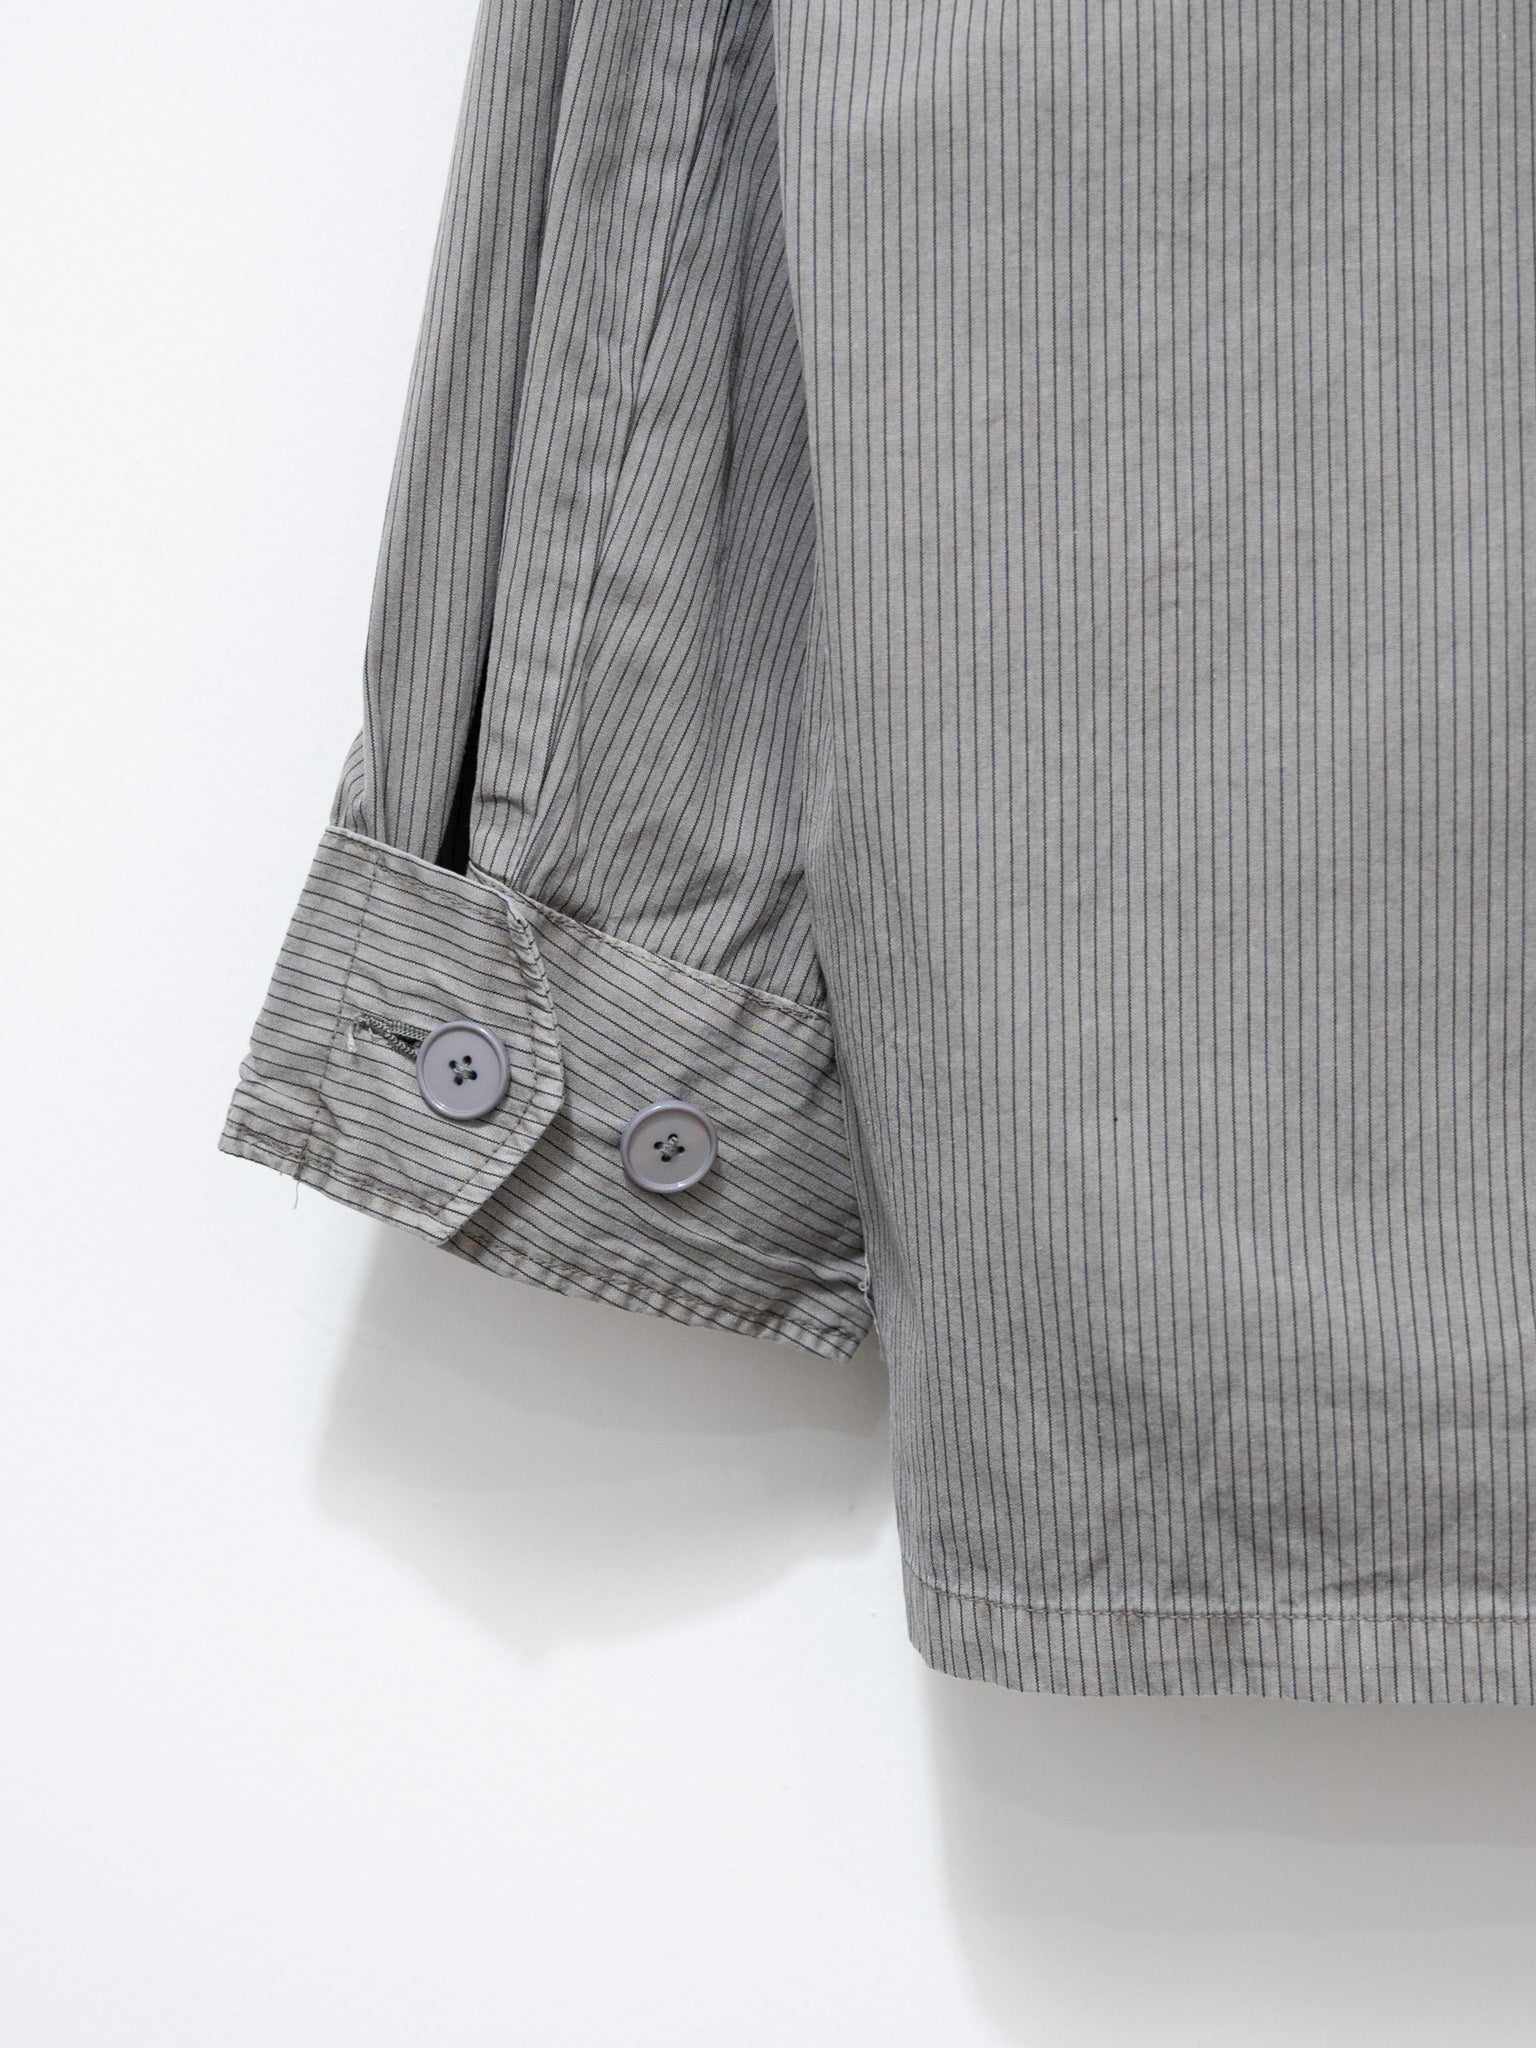 Namu Shop - S H Fatigue Shirt - Gray Stripe